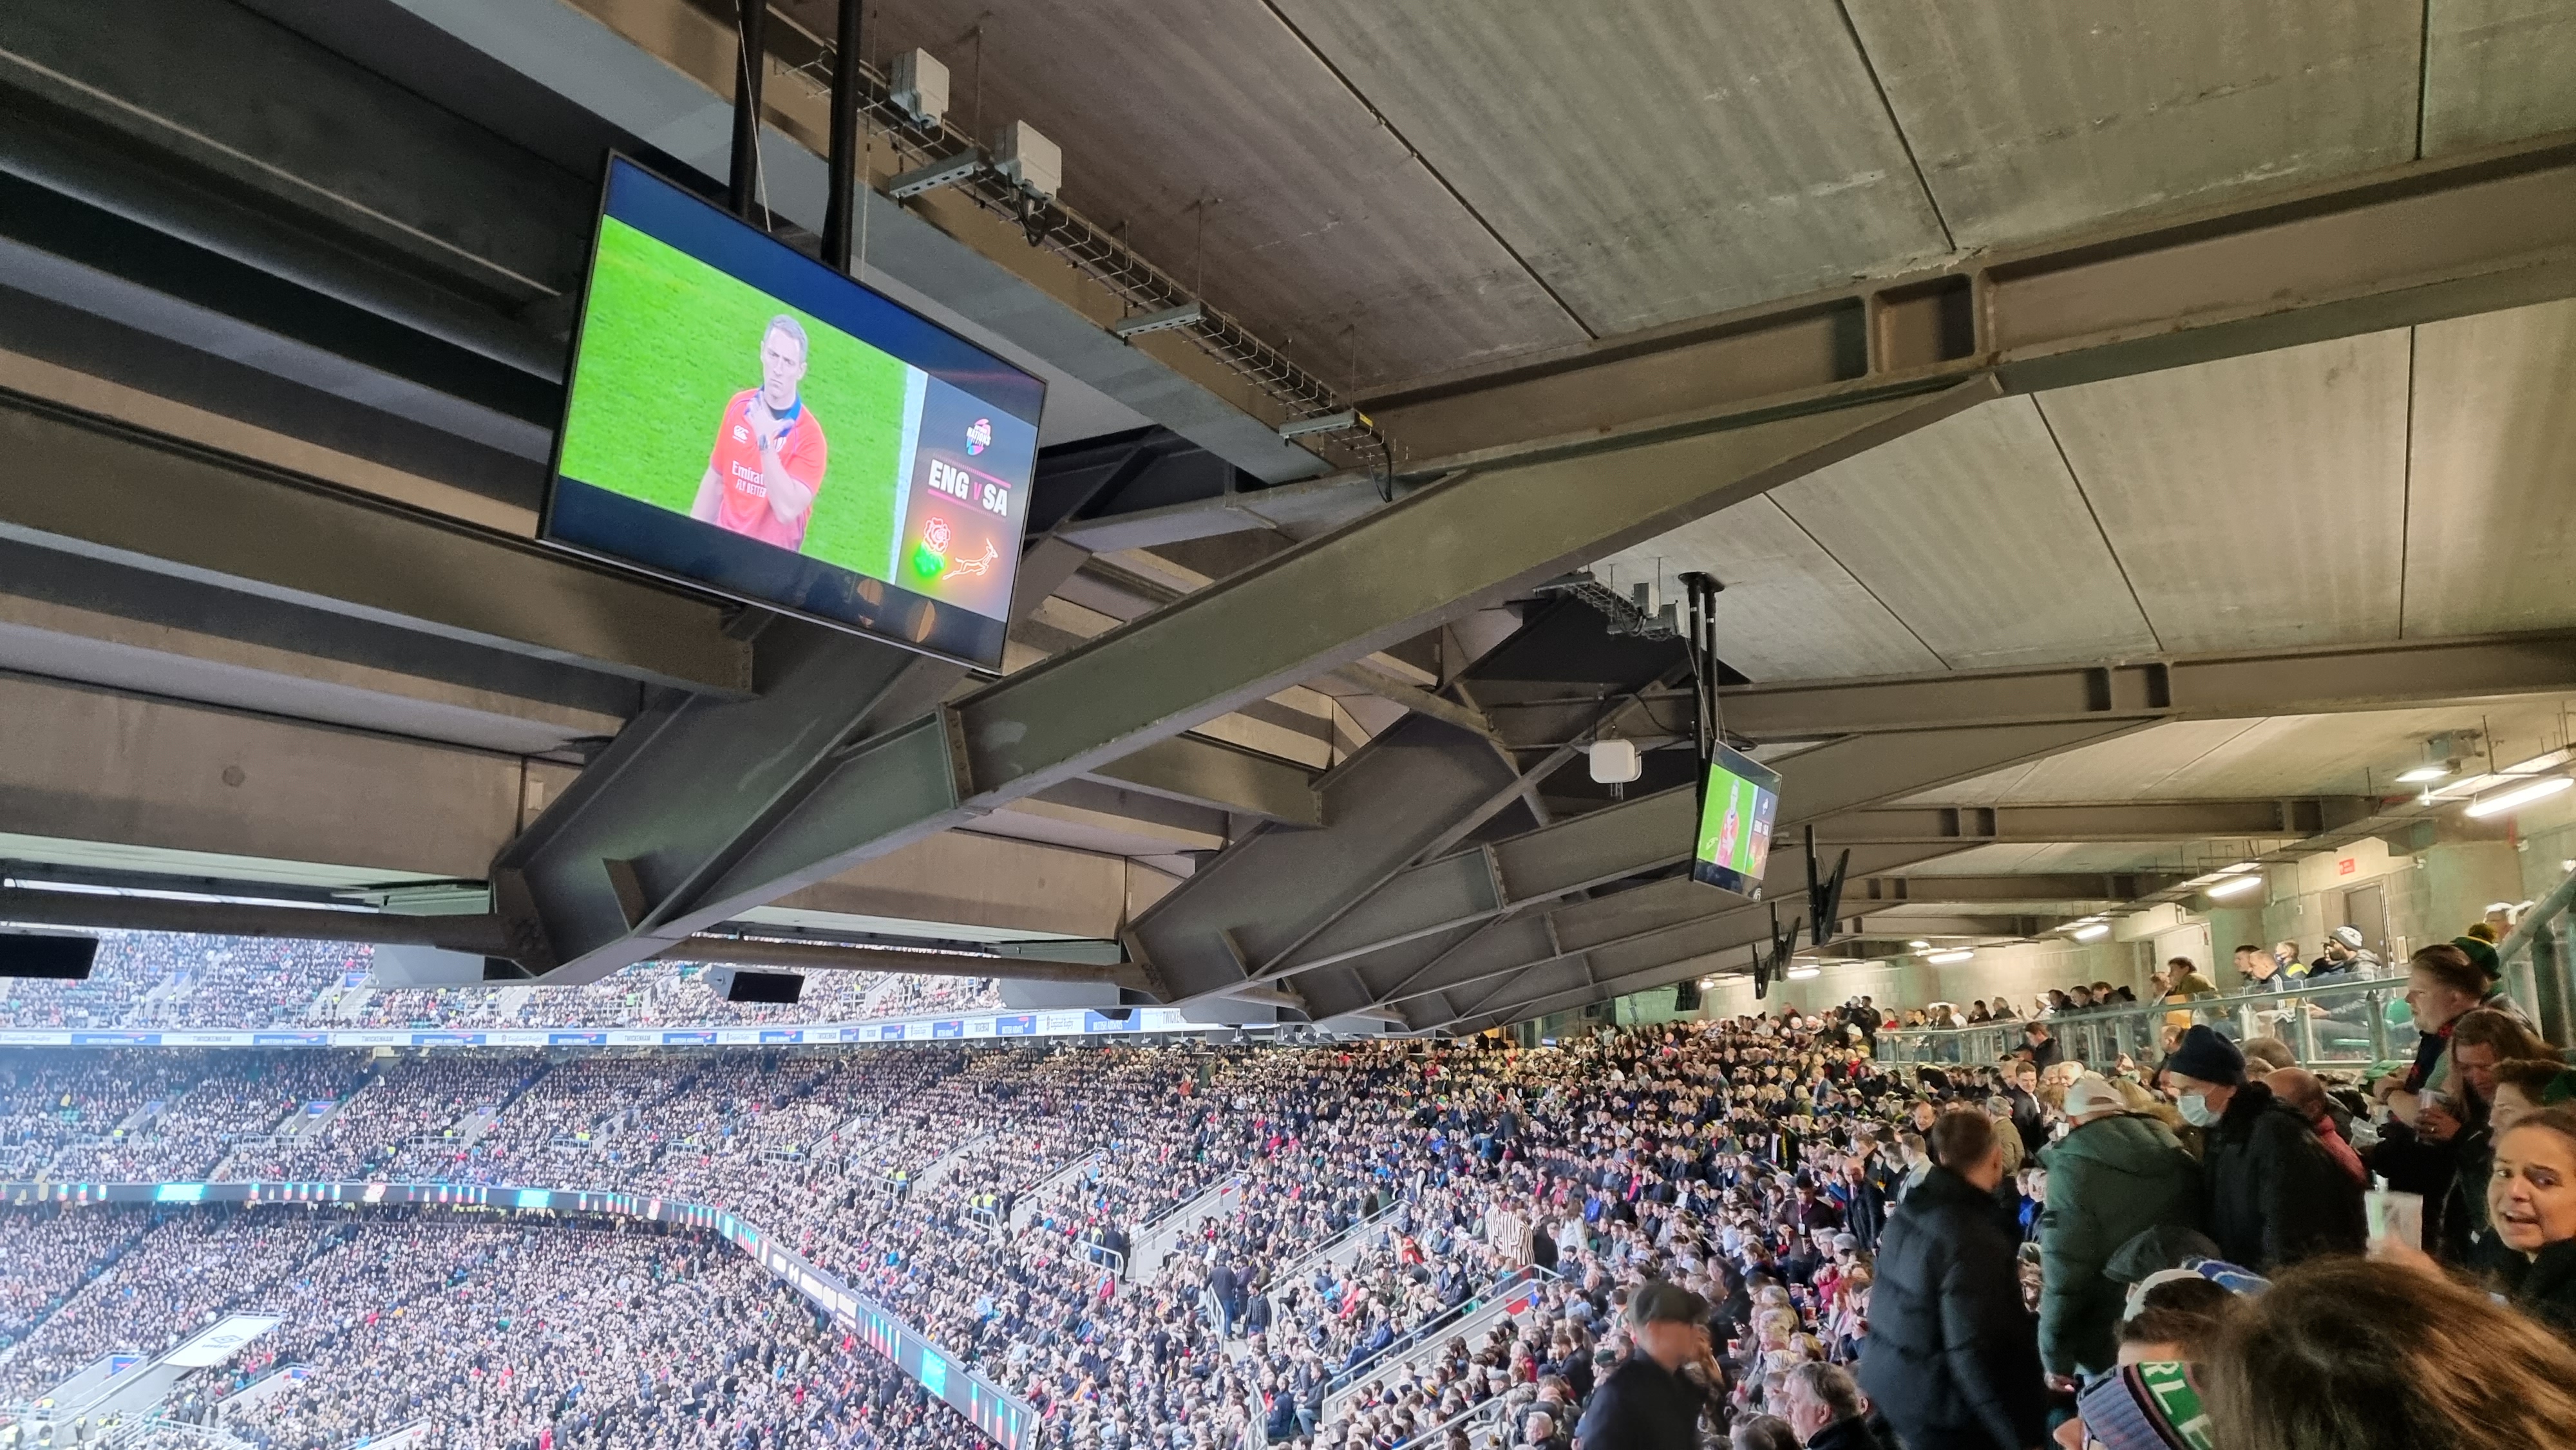 System 2 Ceiling Mounted Screens, Twickenham Stadium, UK